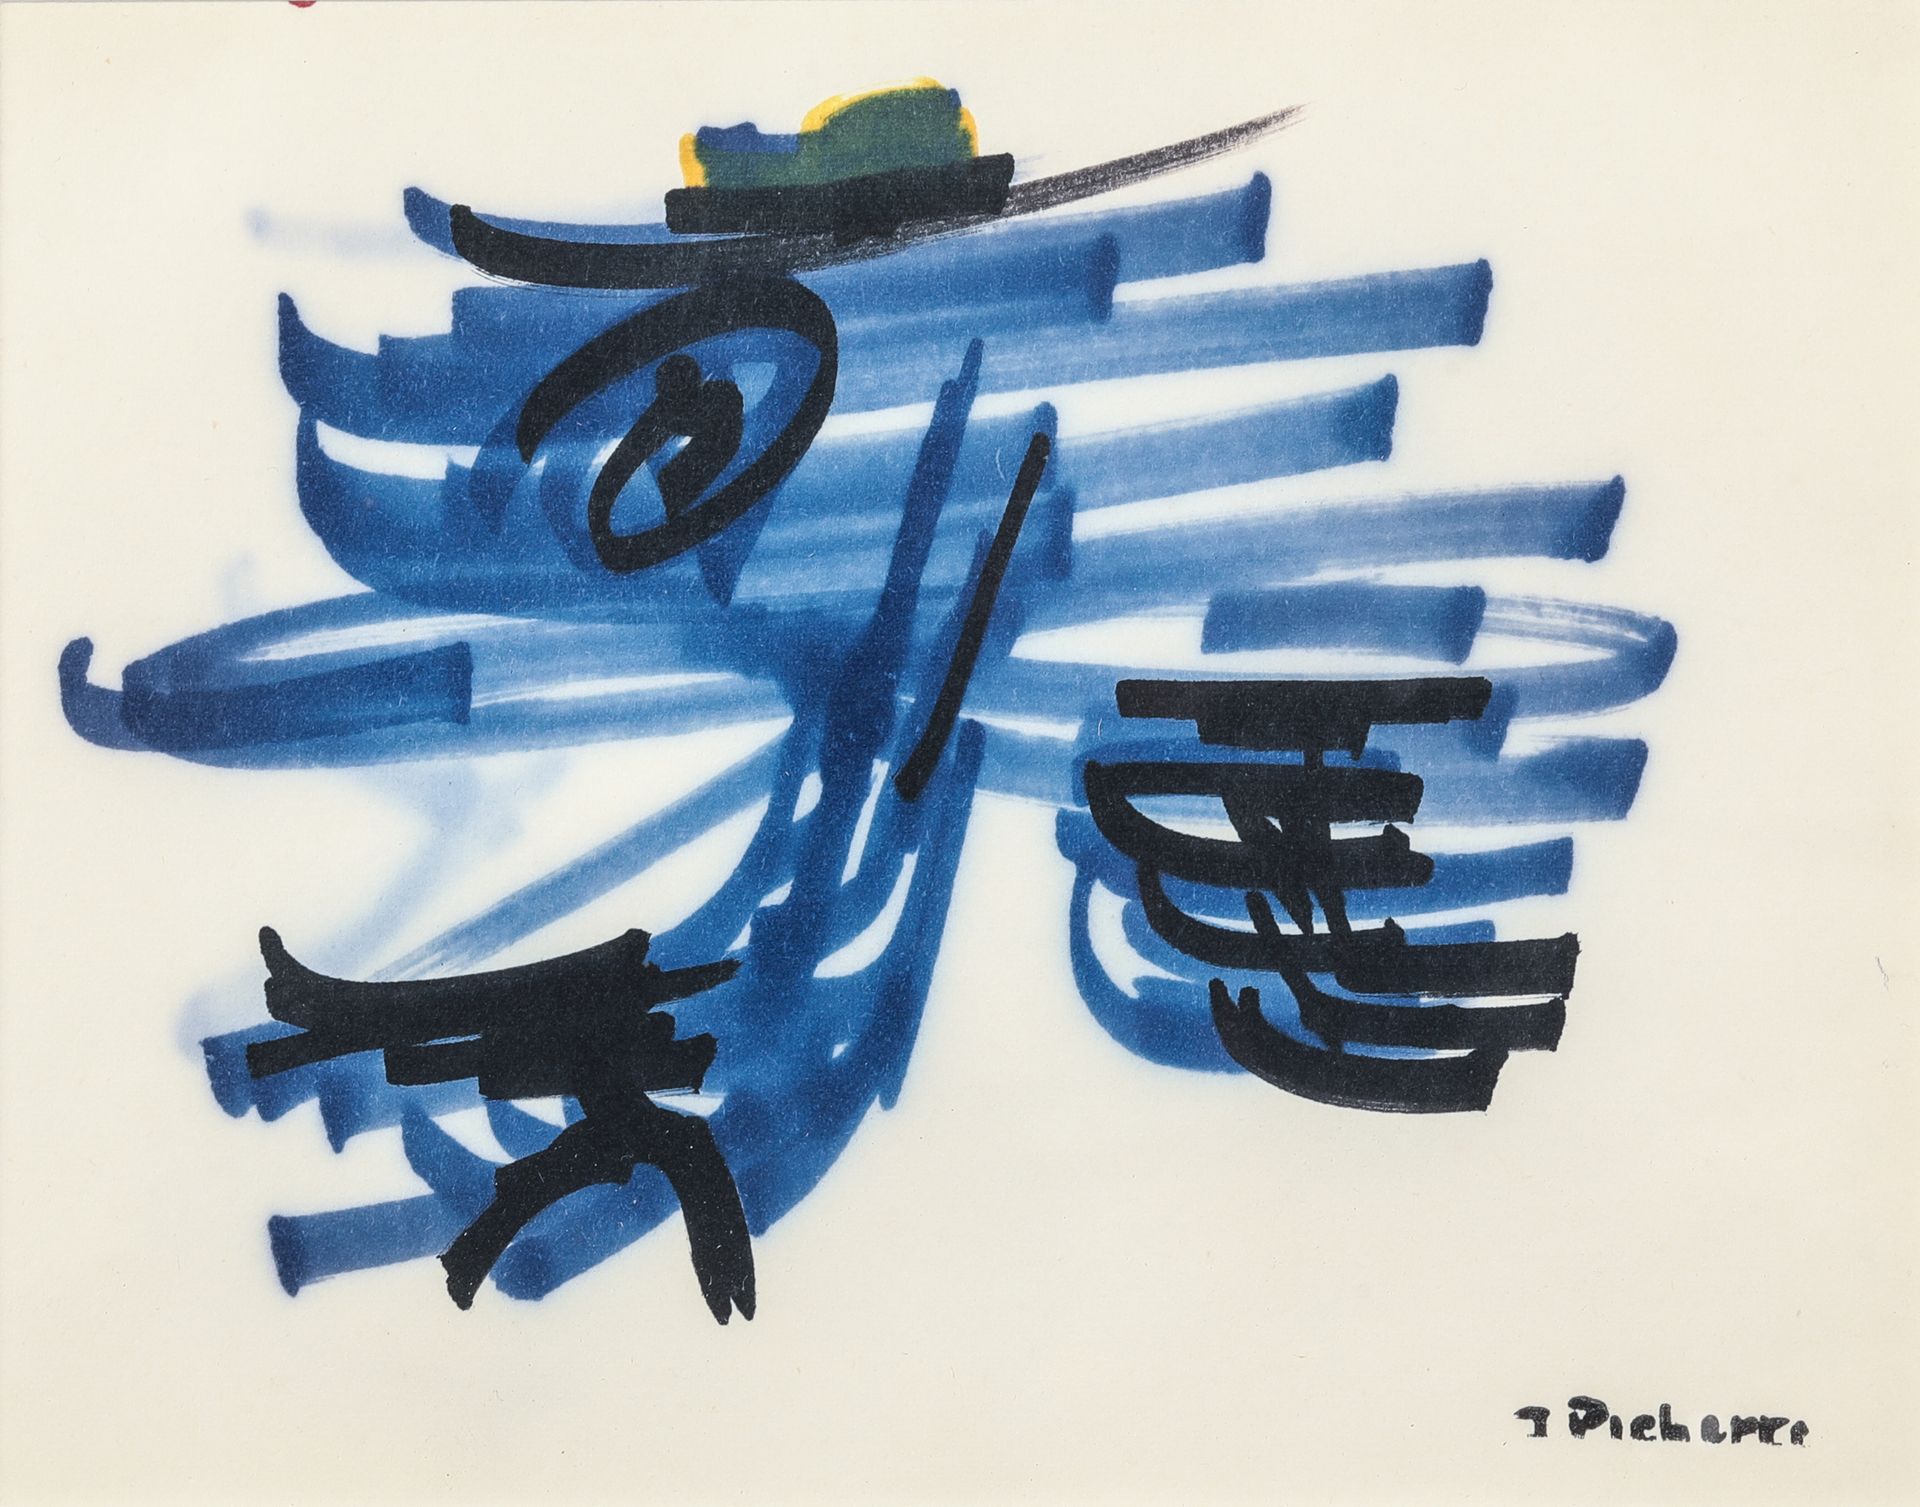 Null 
詹姆斯-皮克特(1920-1996)

构成

纸上水粉画，右下角有签名

13 x 16 cm